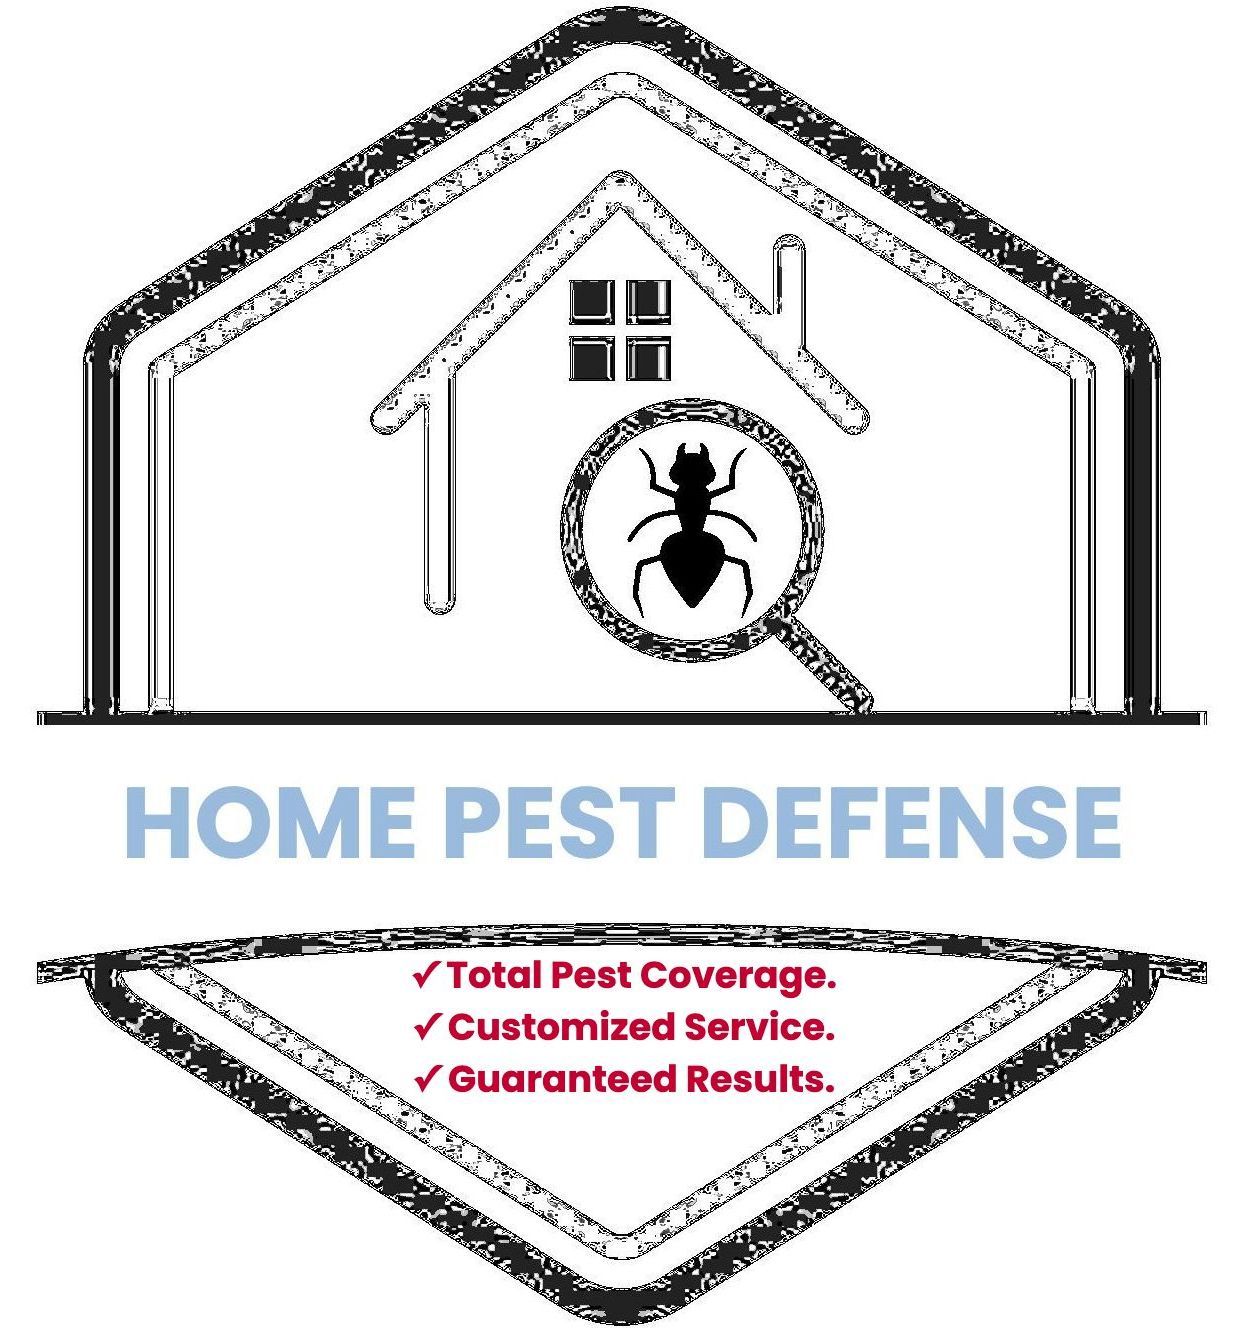 Home pest defense in North Attleborough, Massachusetts. 